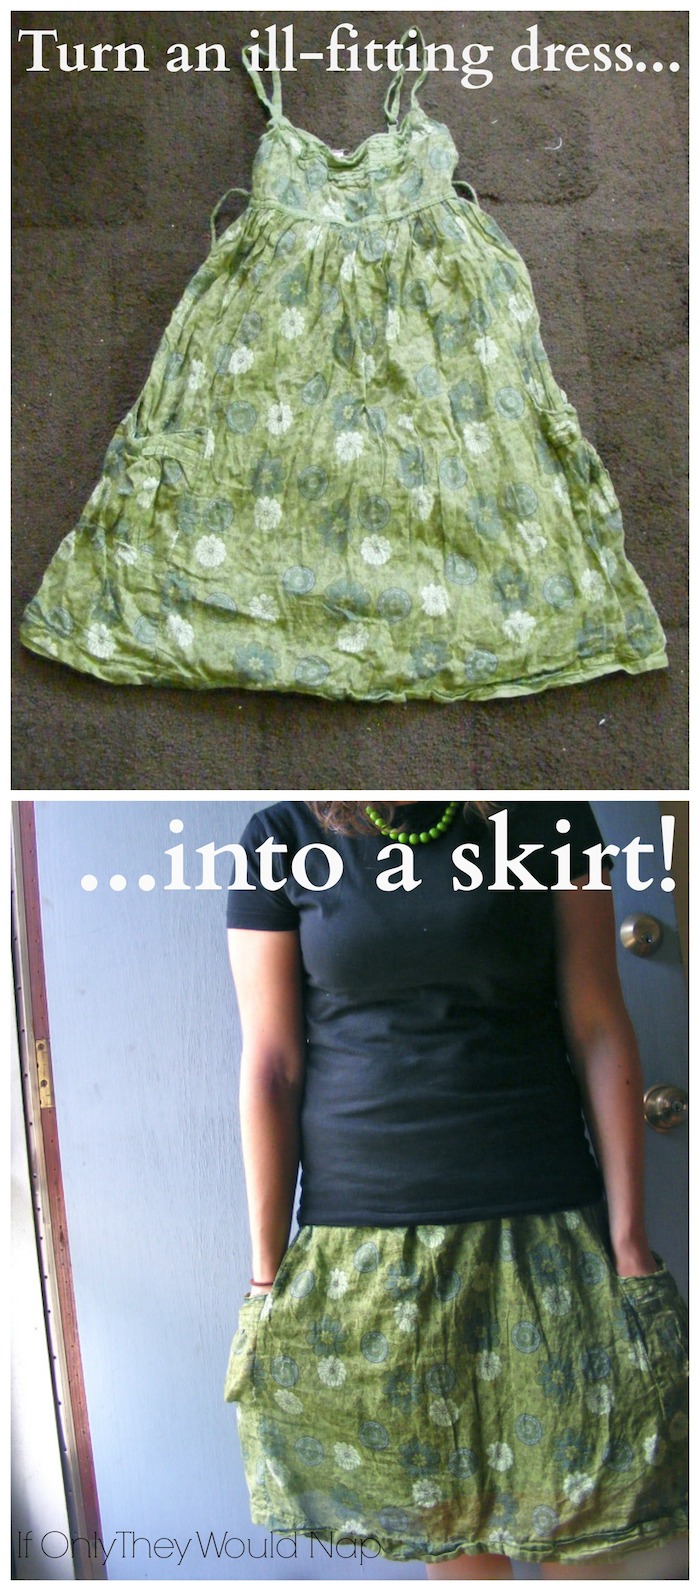 Turn an ill-fitting dress into a skirt